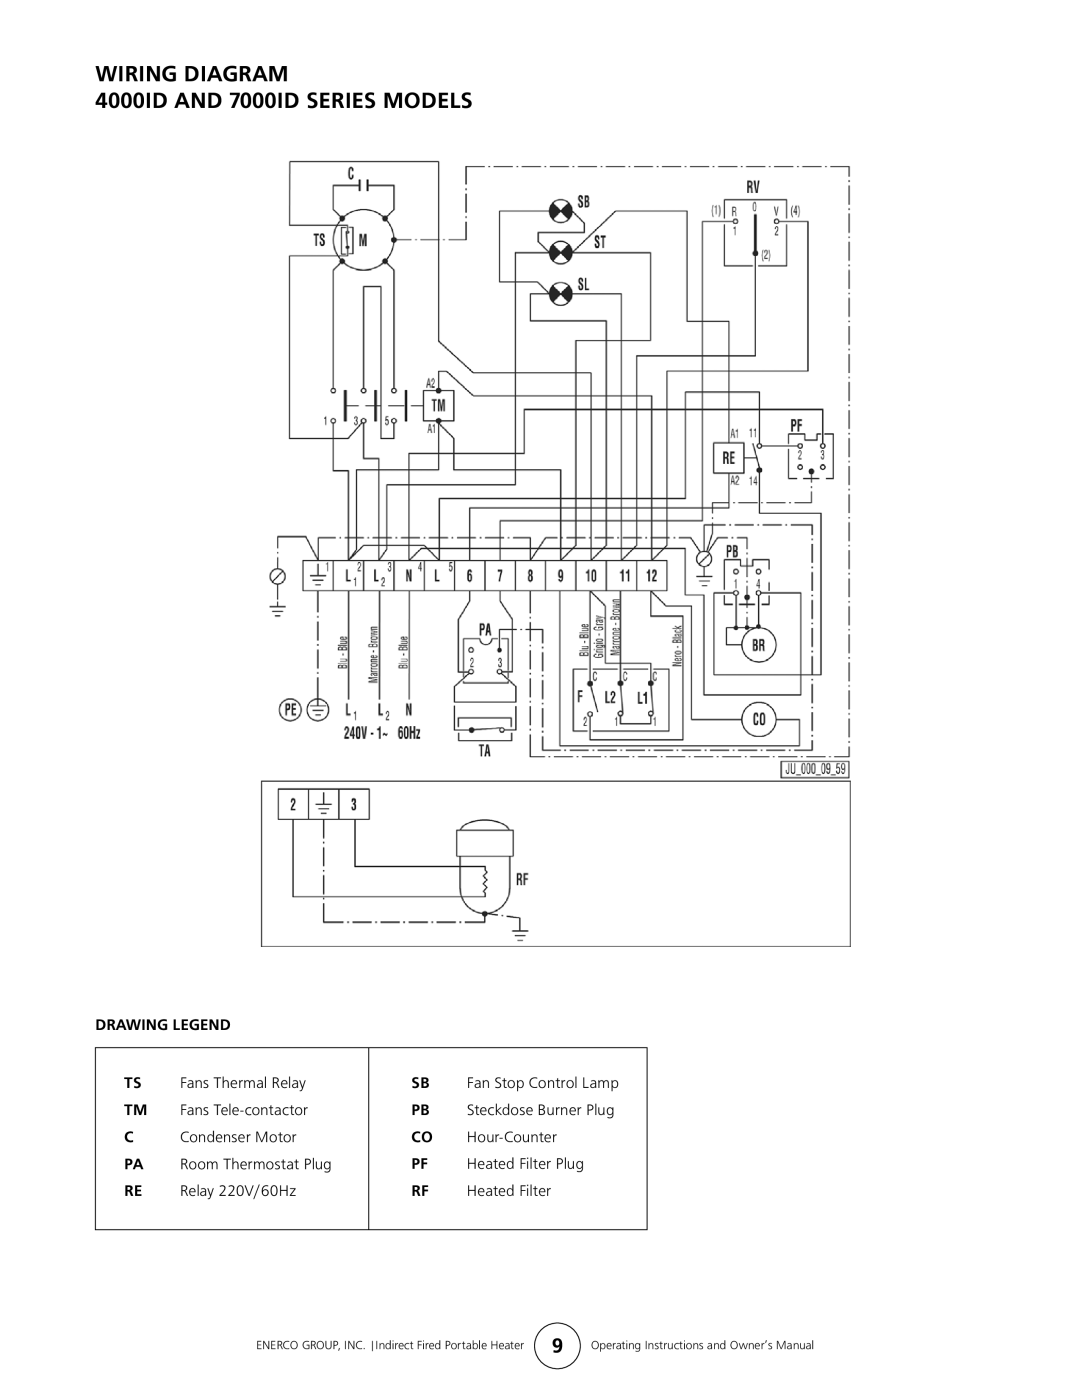 Enerco 7000ID owner manual Wiring Diagram 4000iD and 7000iD Series Models 